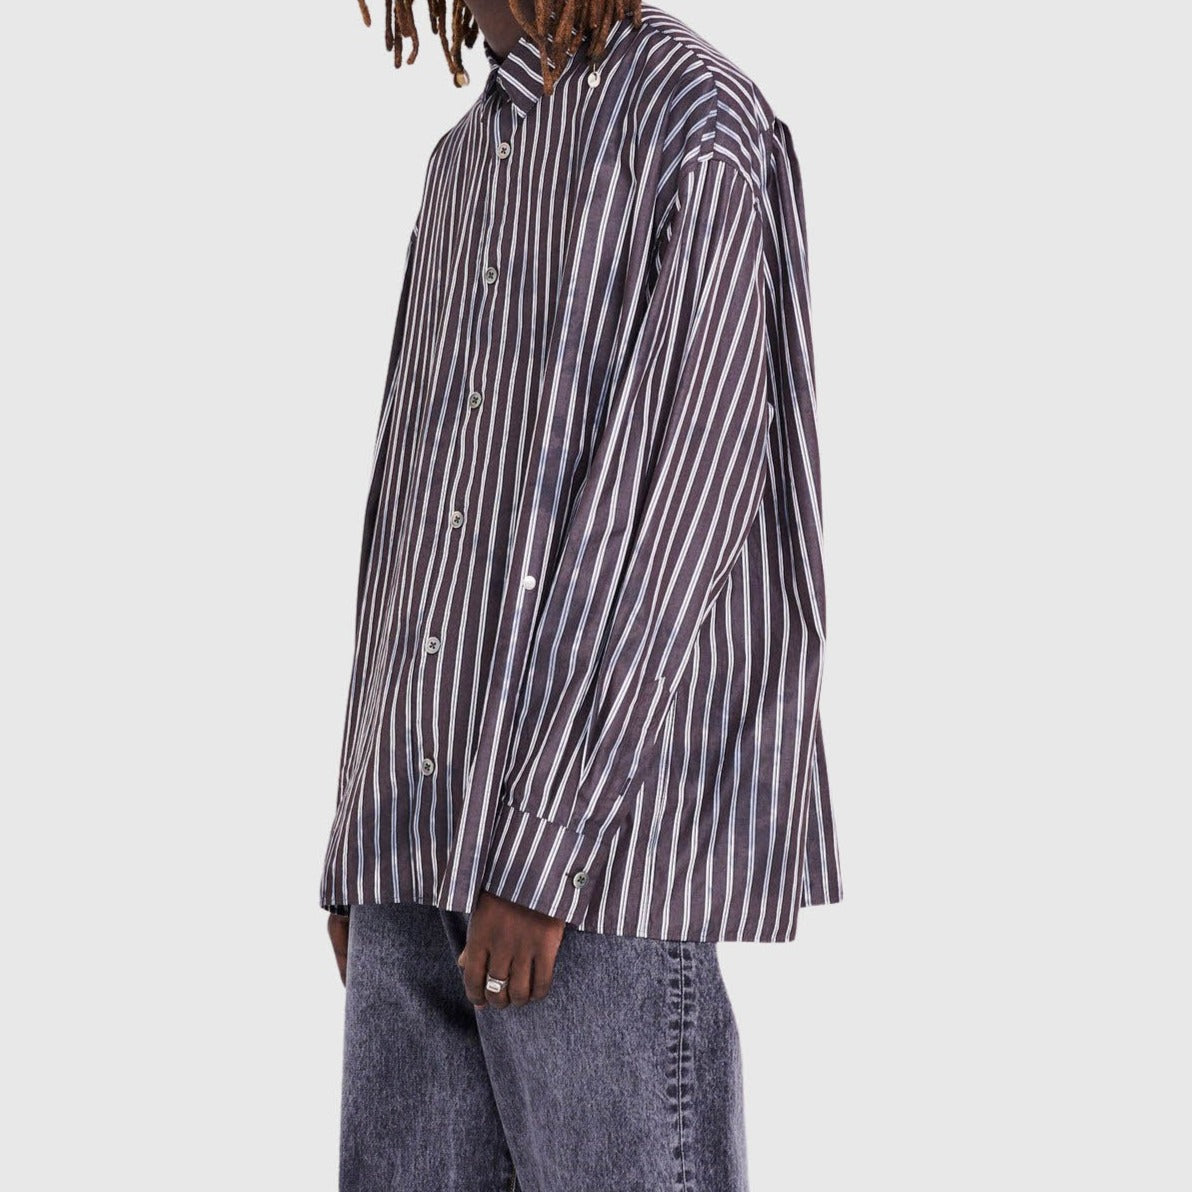 Études Illusion Shirt - Striped Dyed Shirt Etudes 